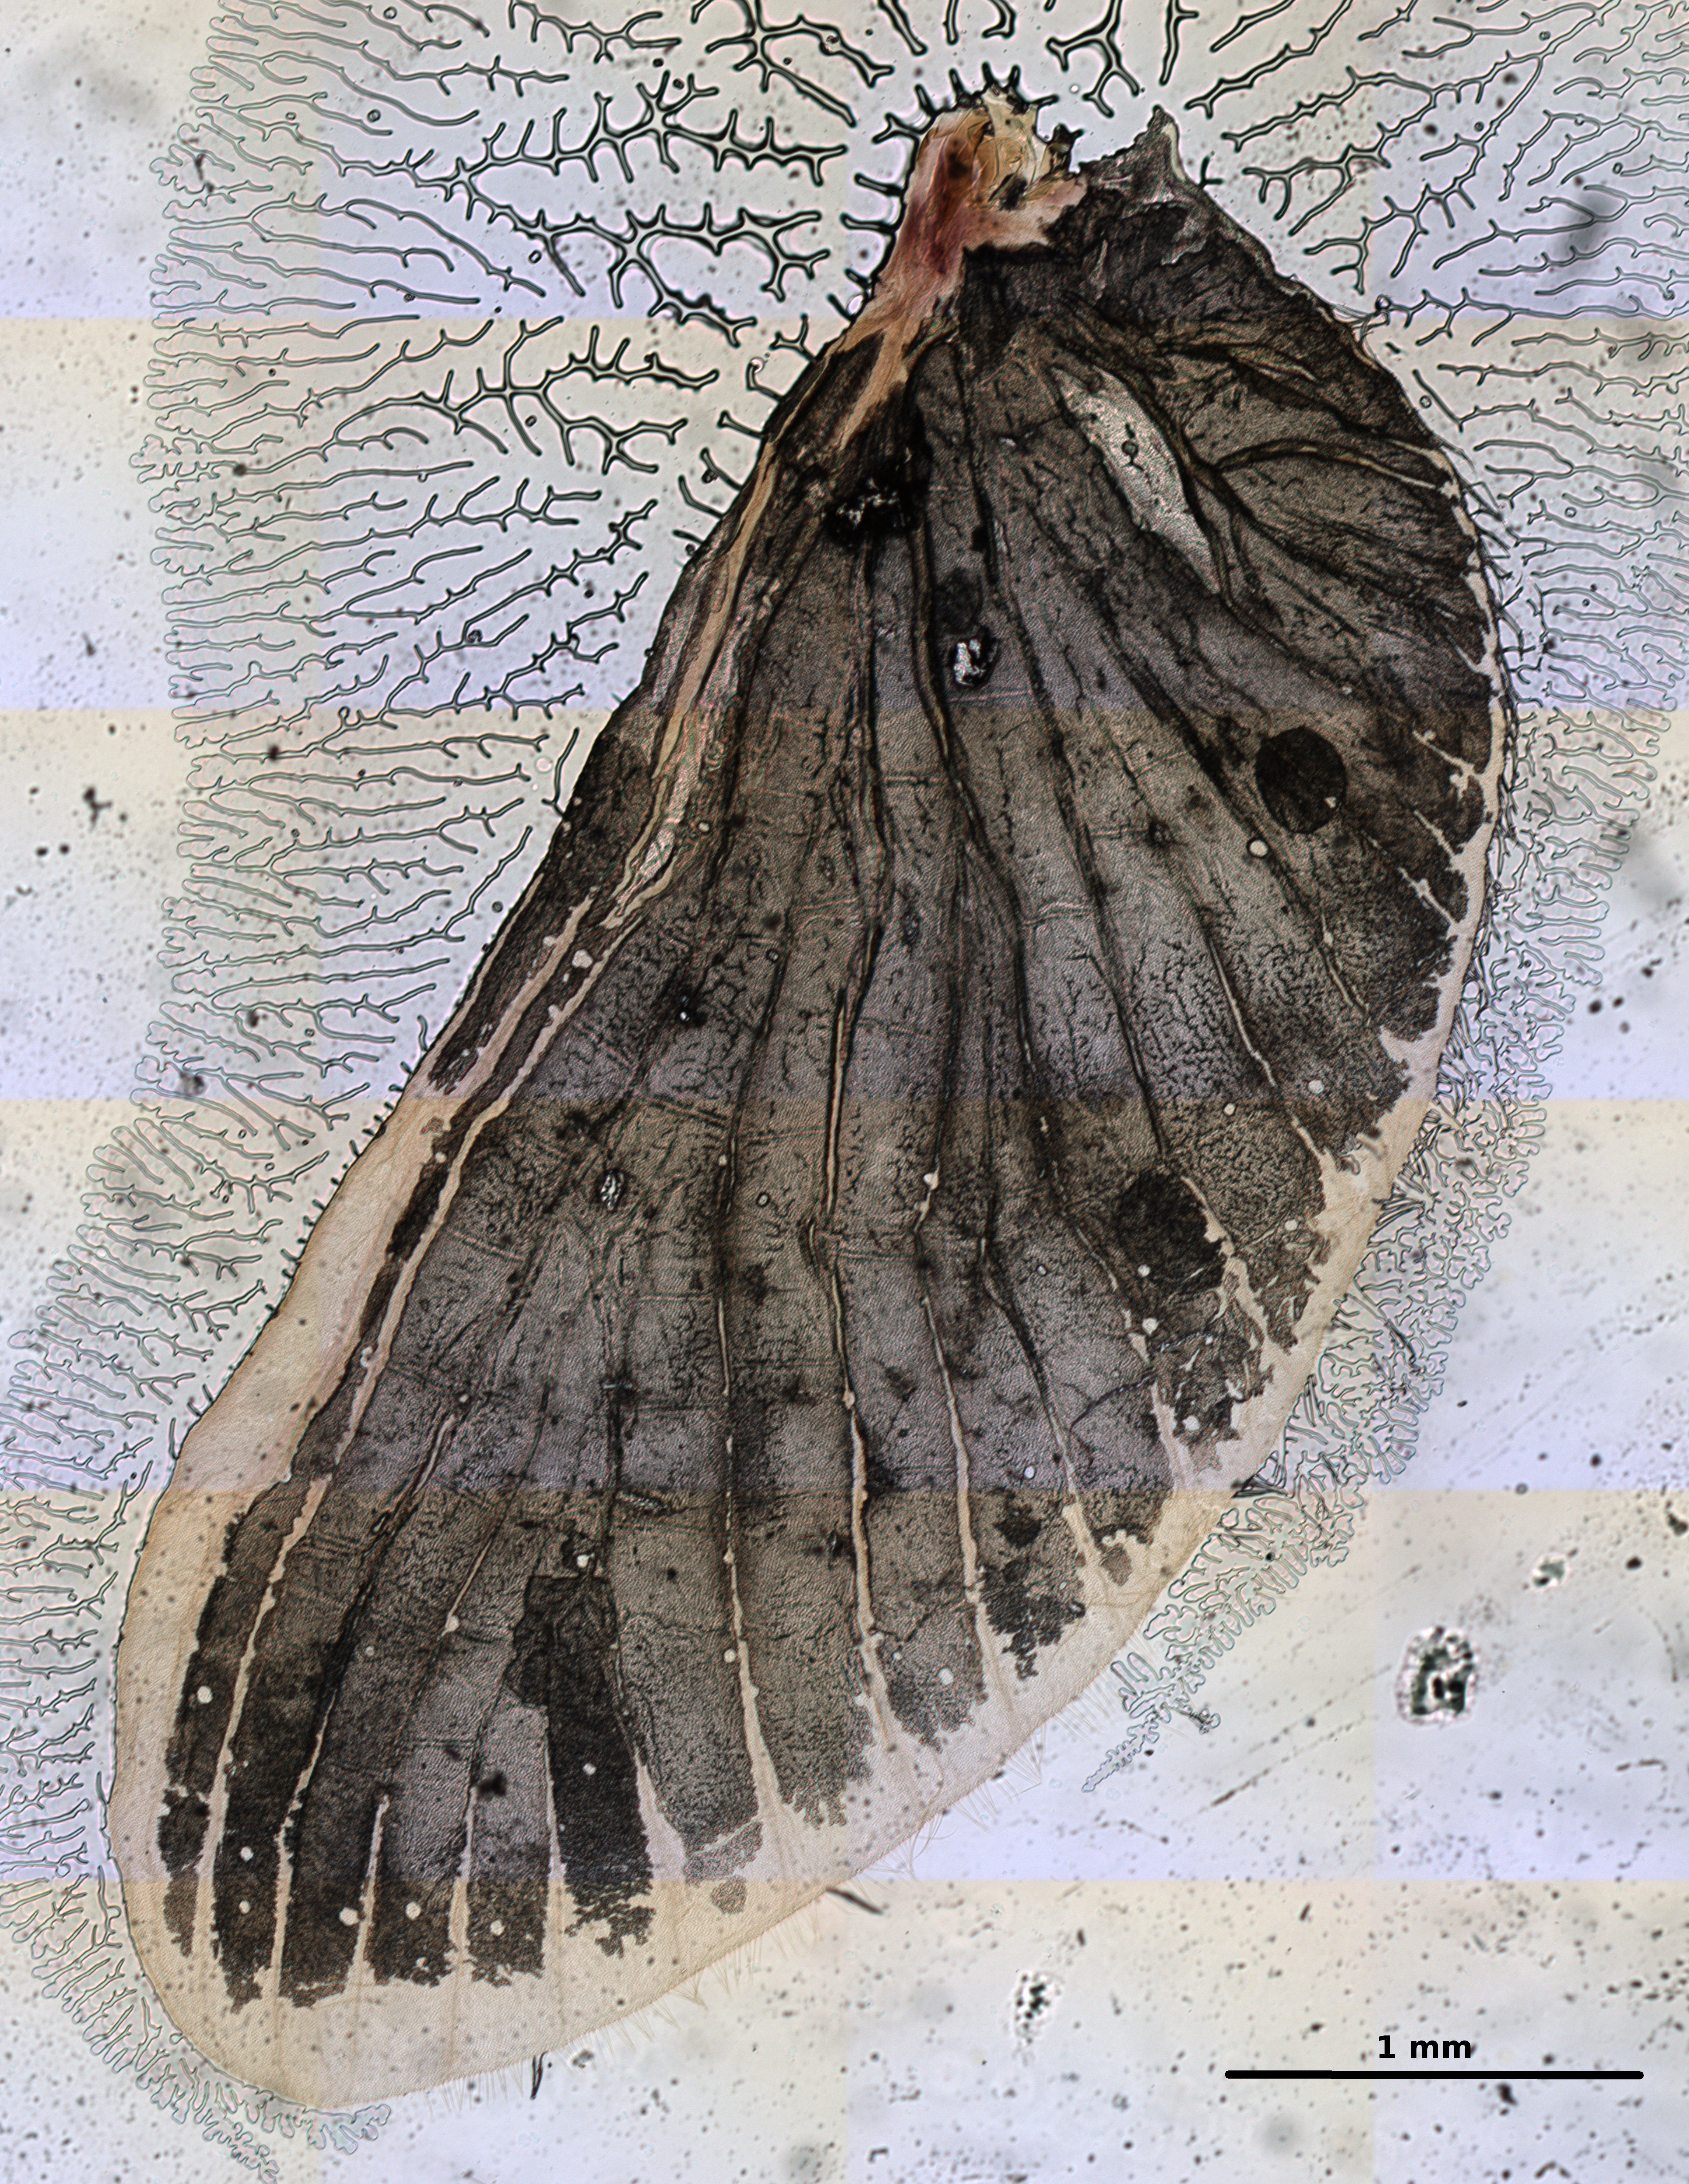 Ephemerythus (Tricomerella) straeleni s3 wing2 5x.JPG